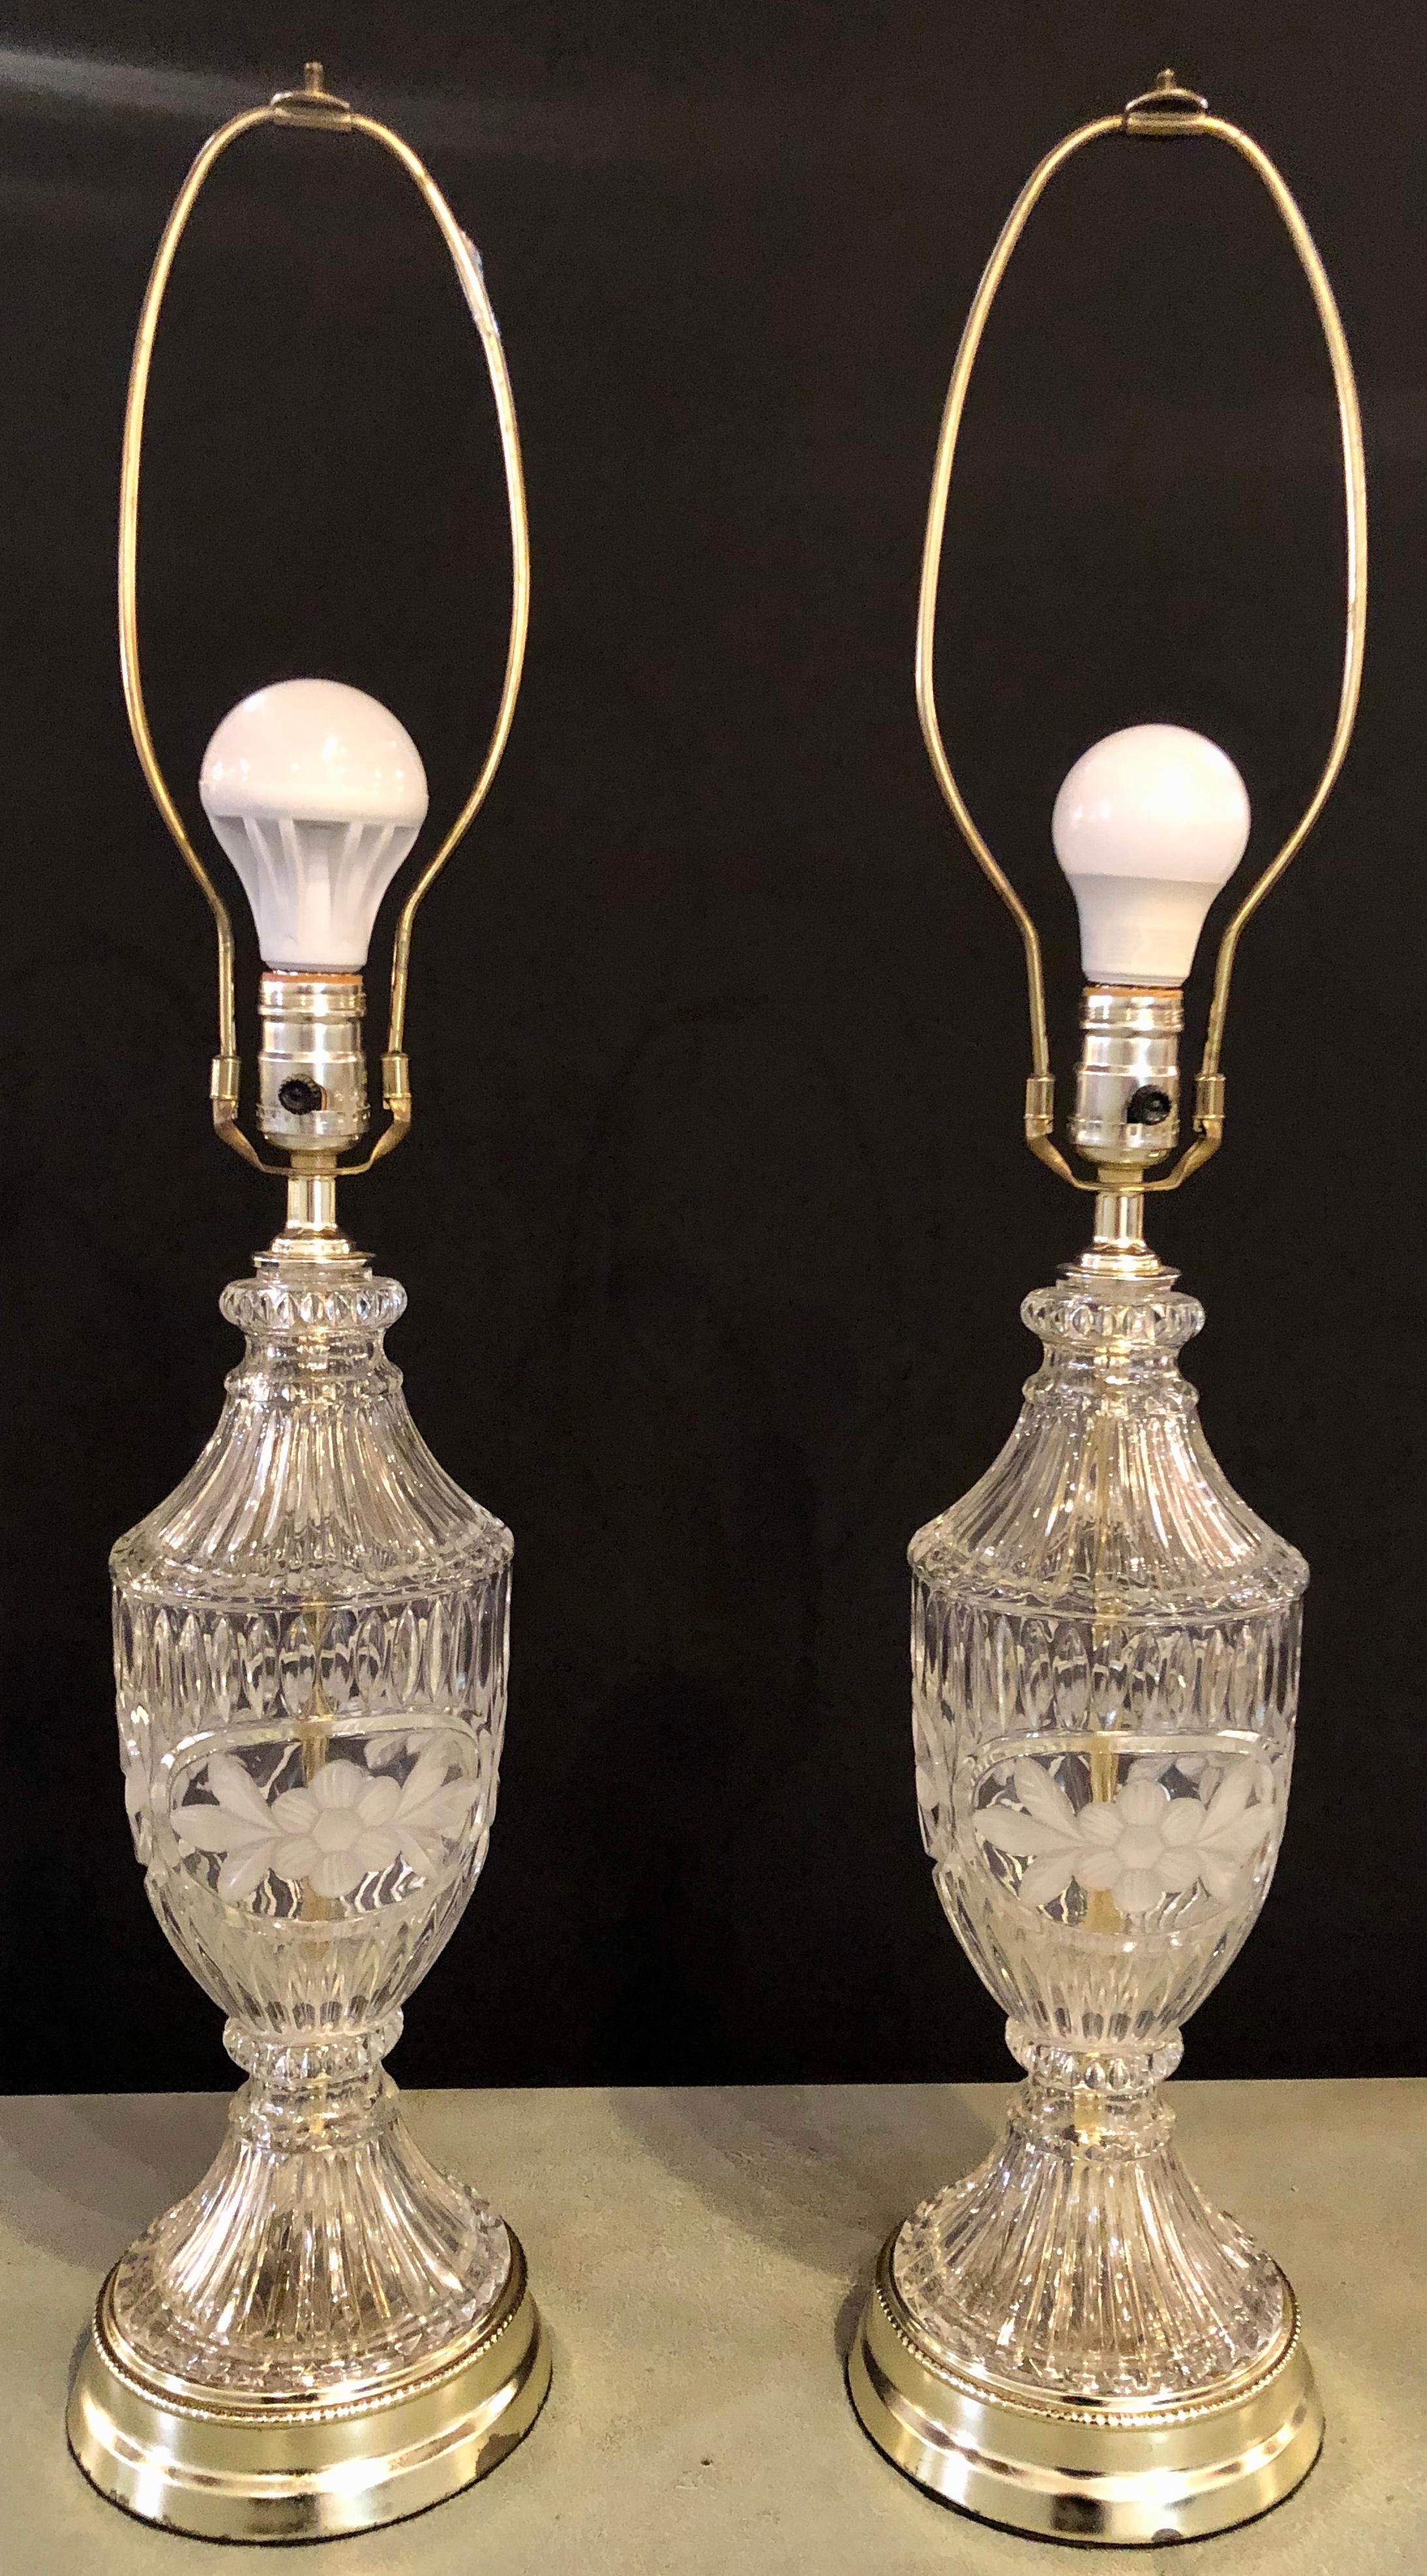 Pair of cut glass lamps having an urn form. Each taking one sixty watt light bulb.